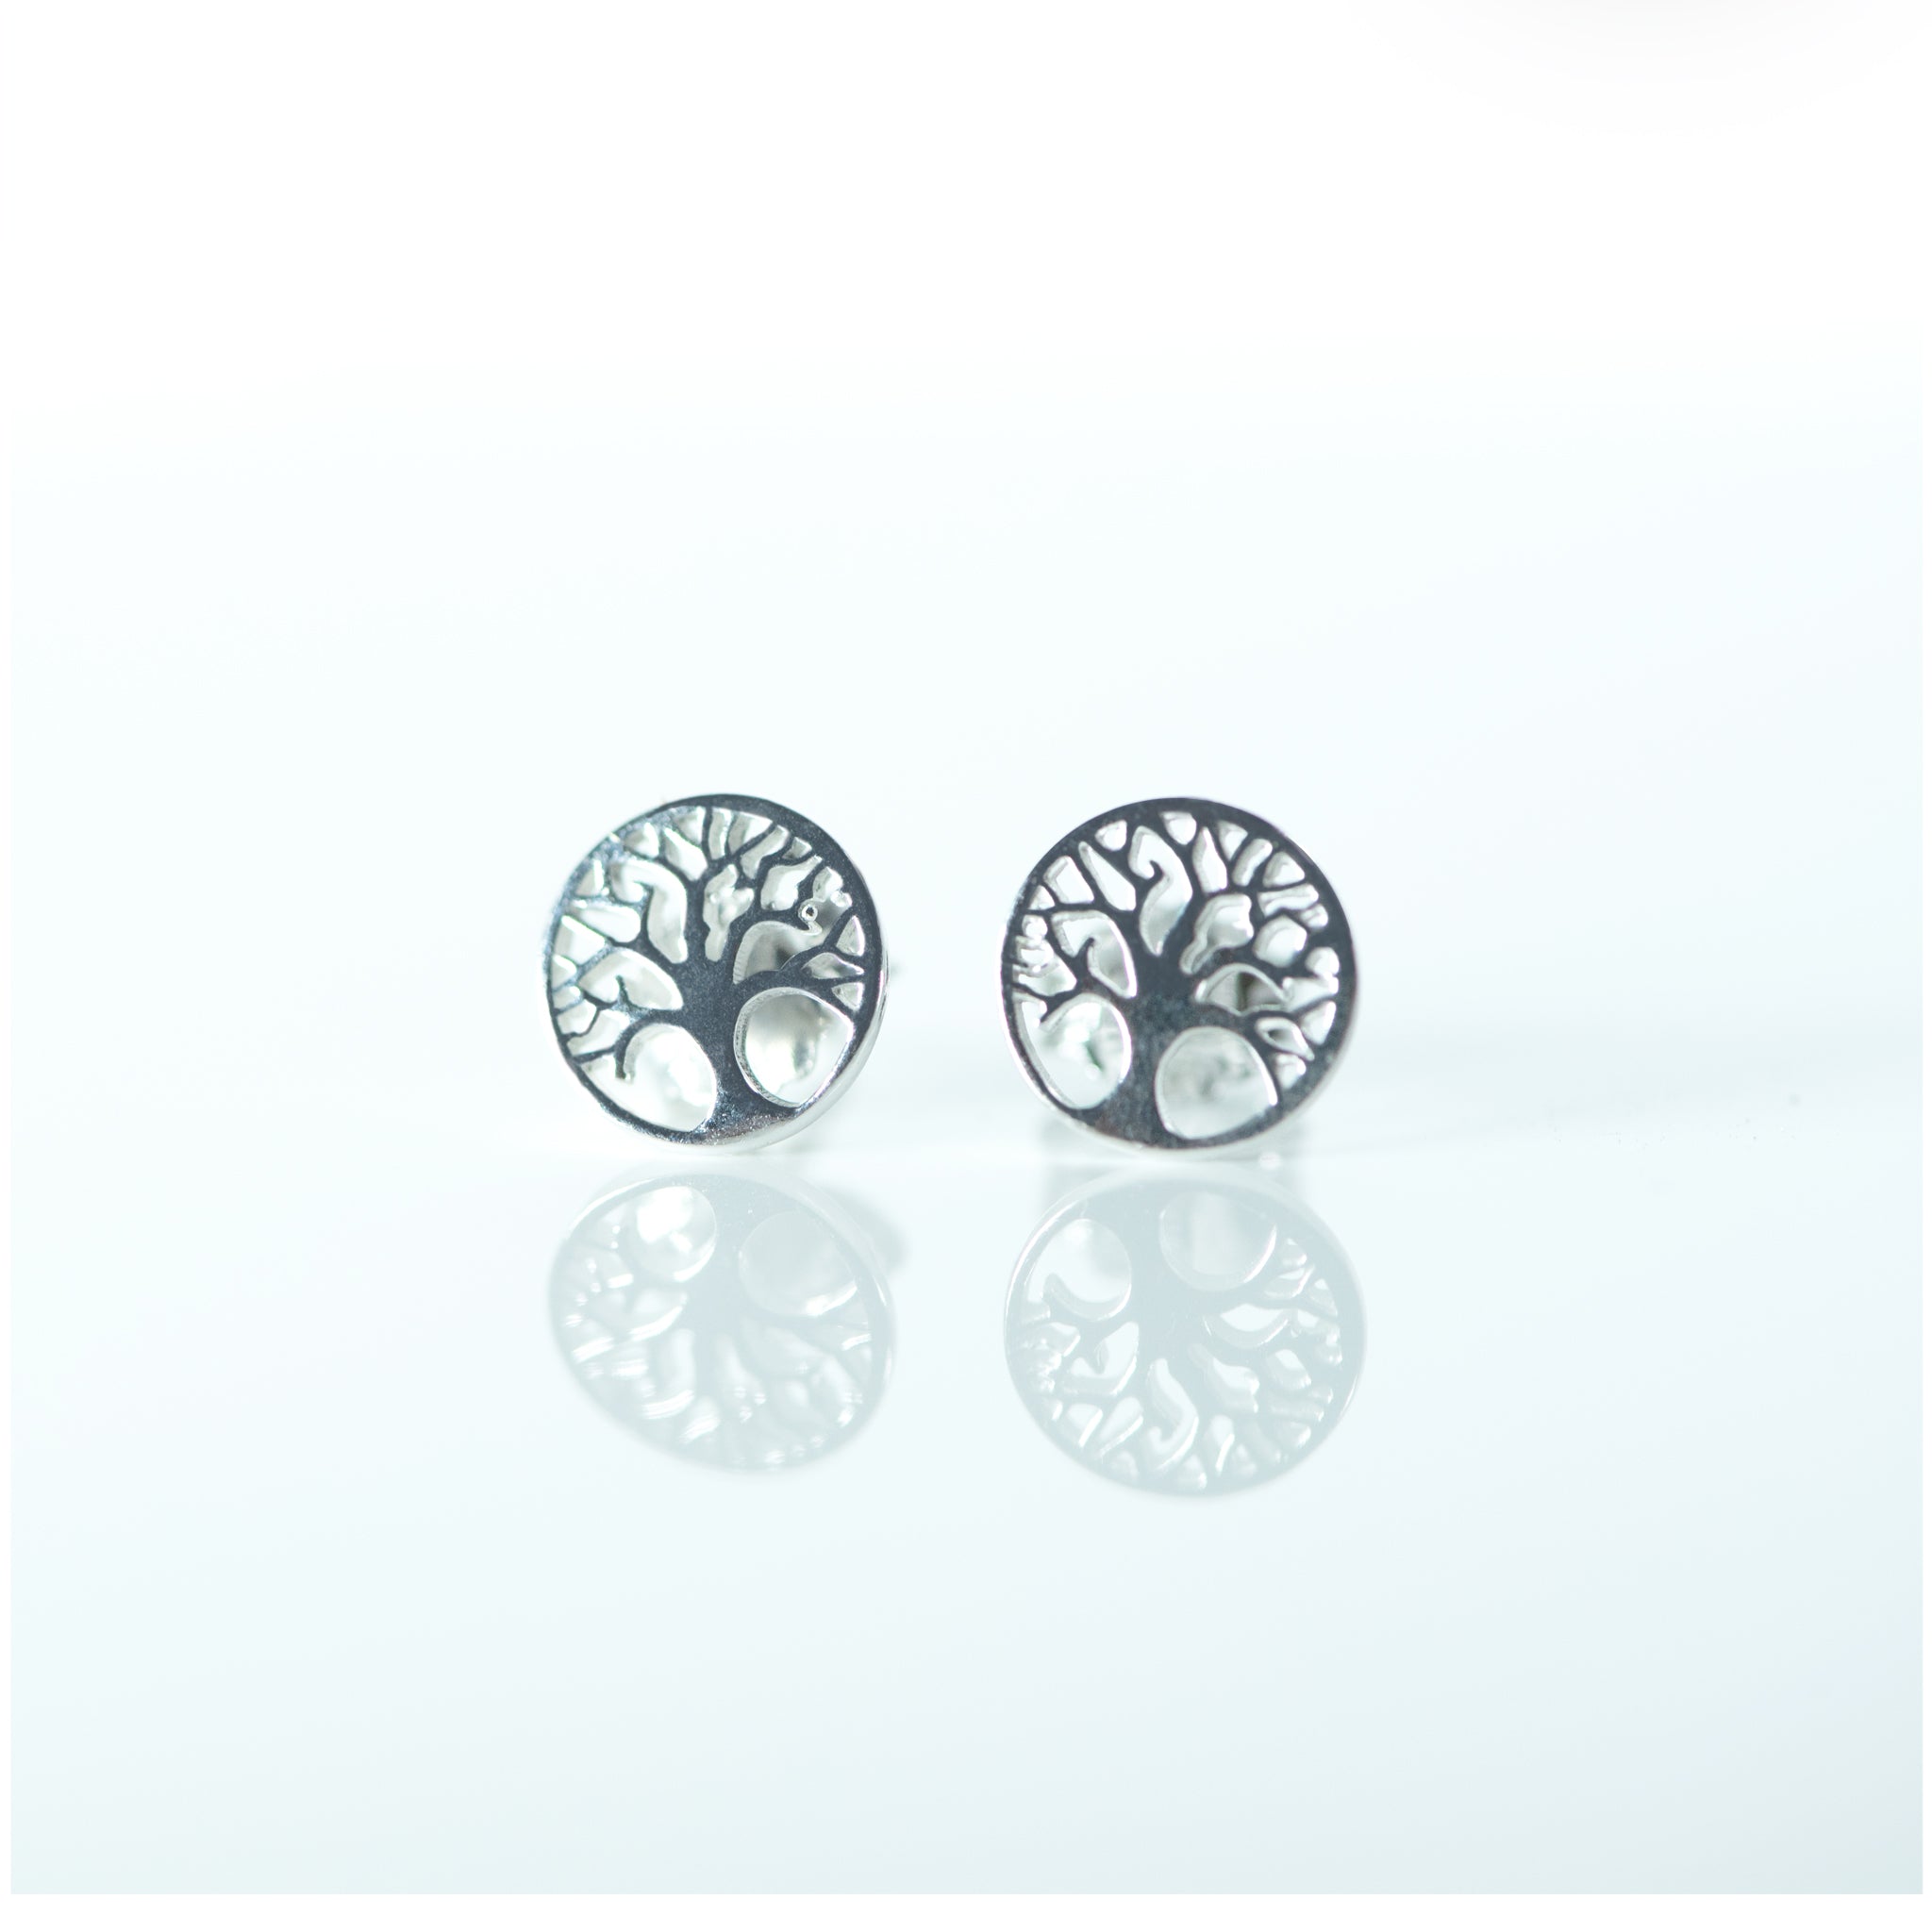 SES005 - Sterling Silver Tree of Life Earrings